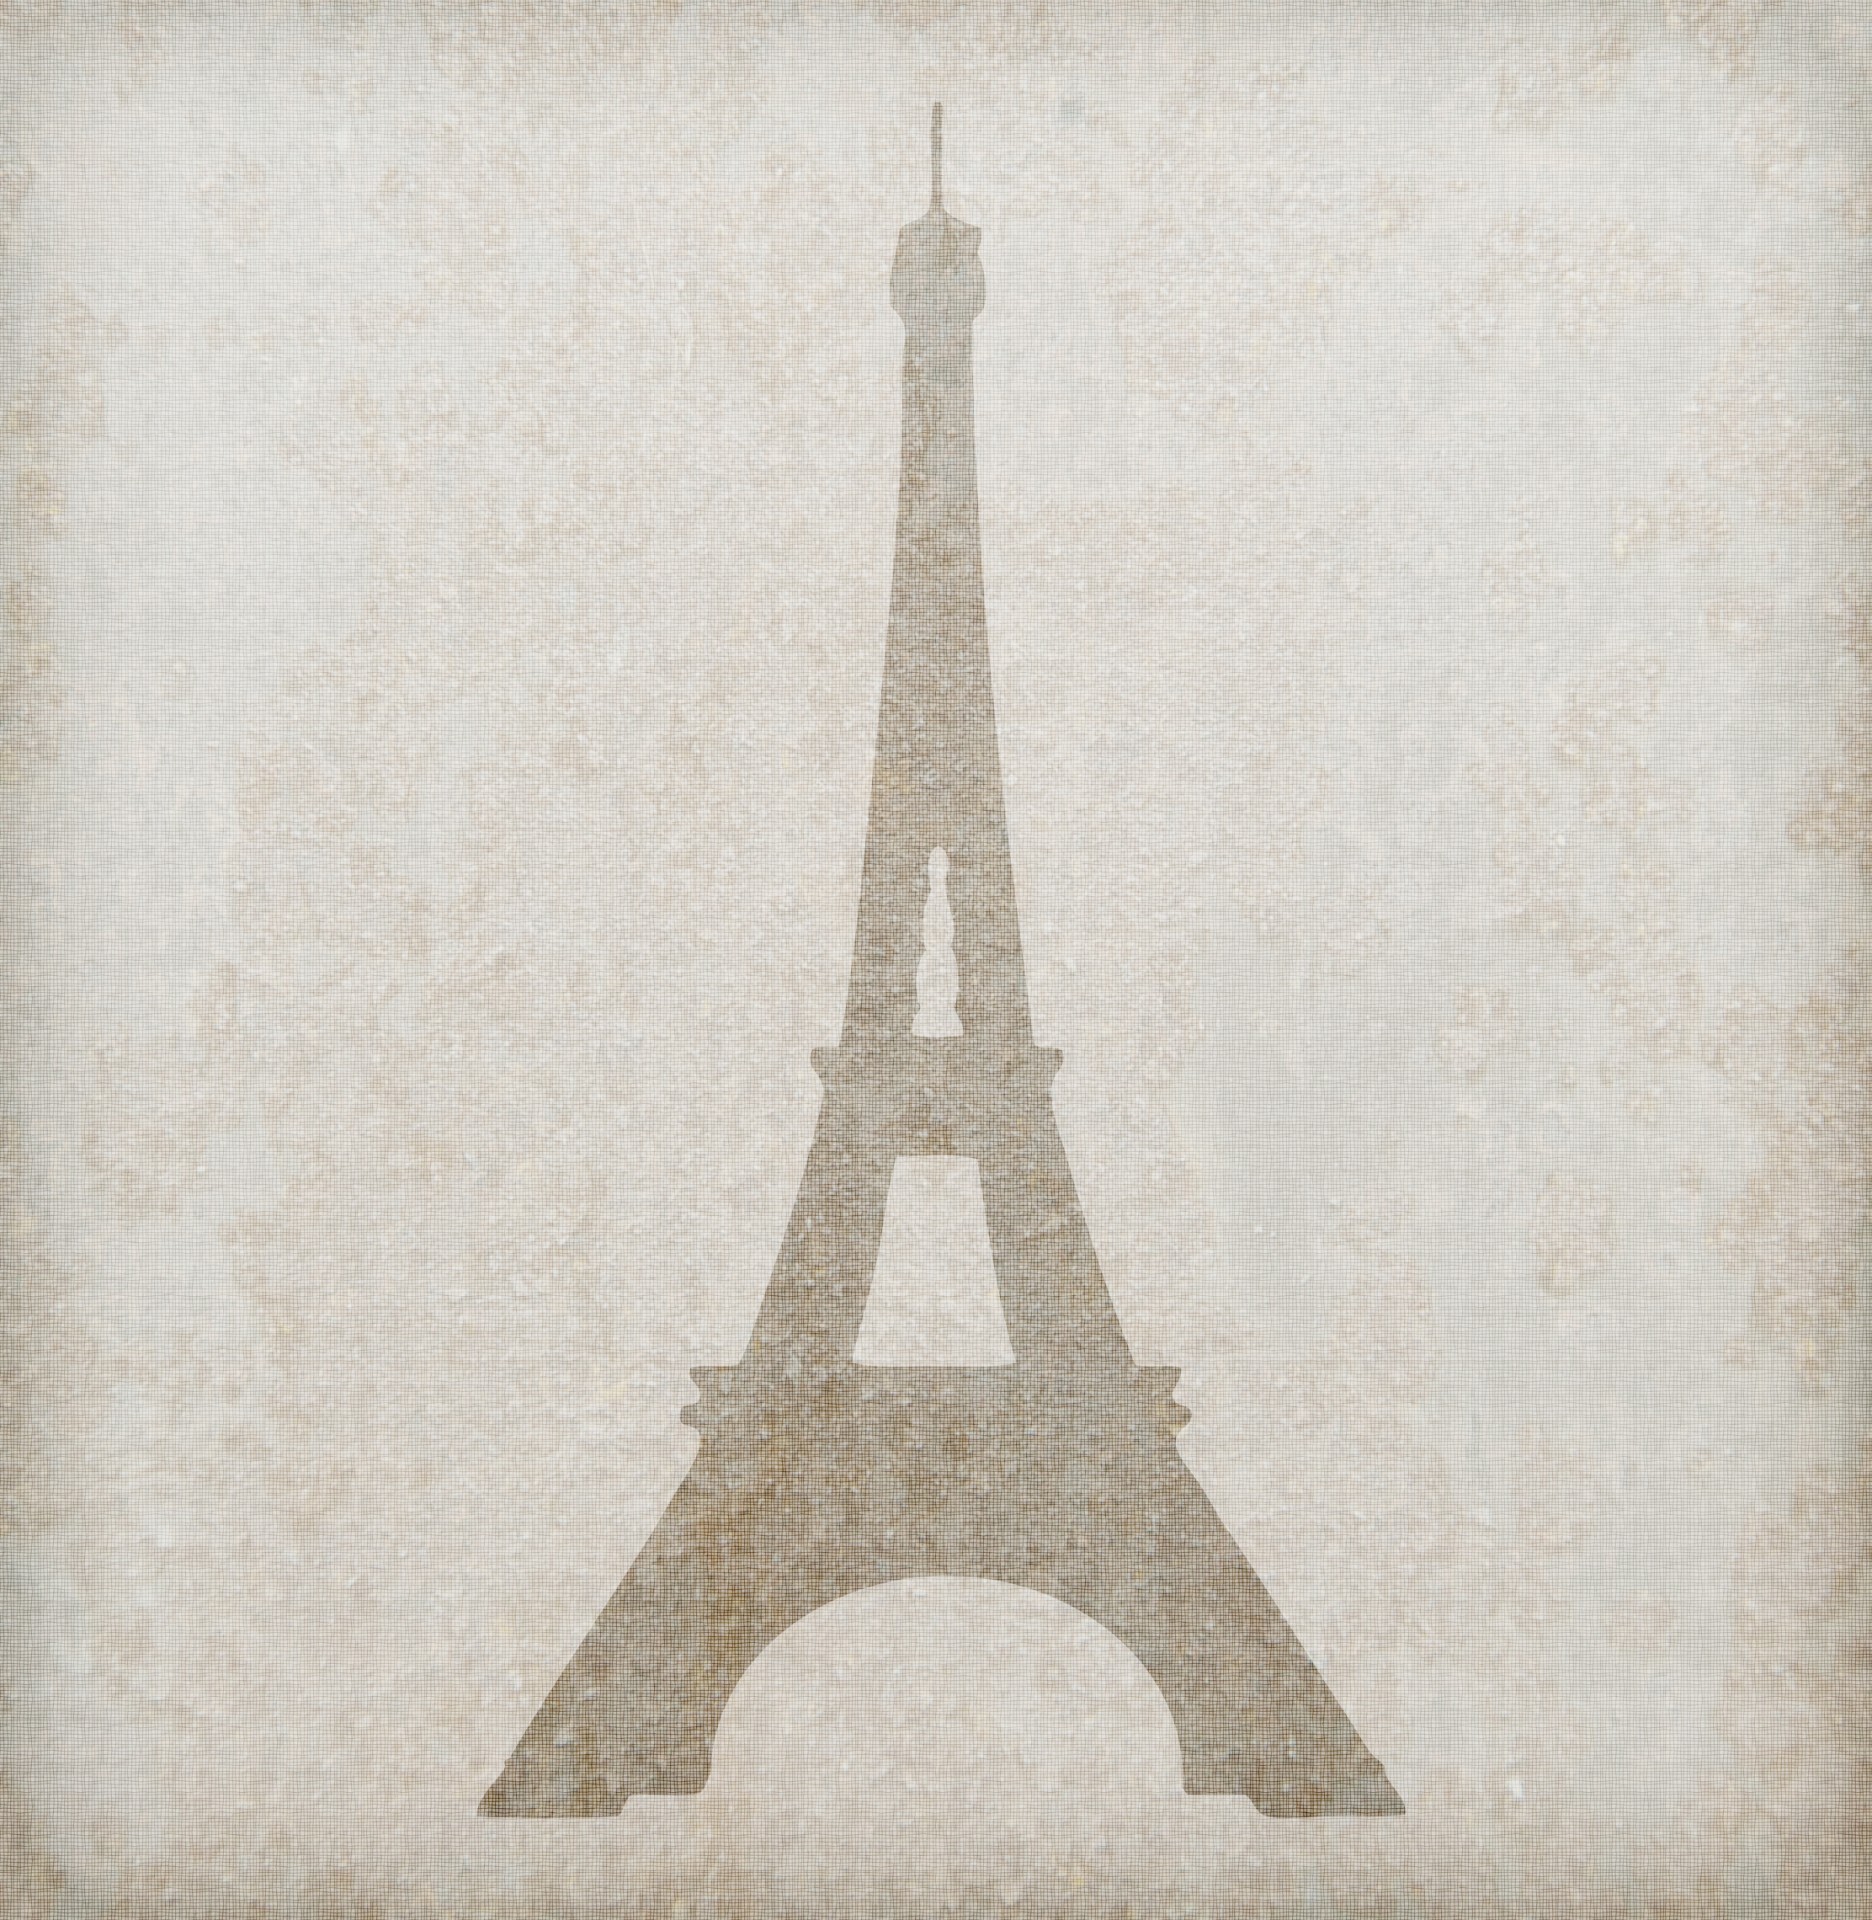 Vintage Eiffel Tower Antecedentes